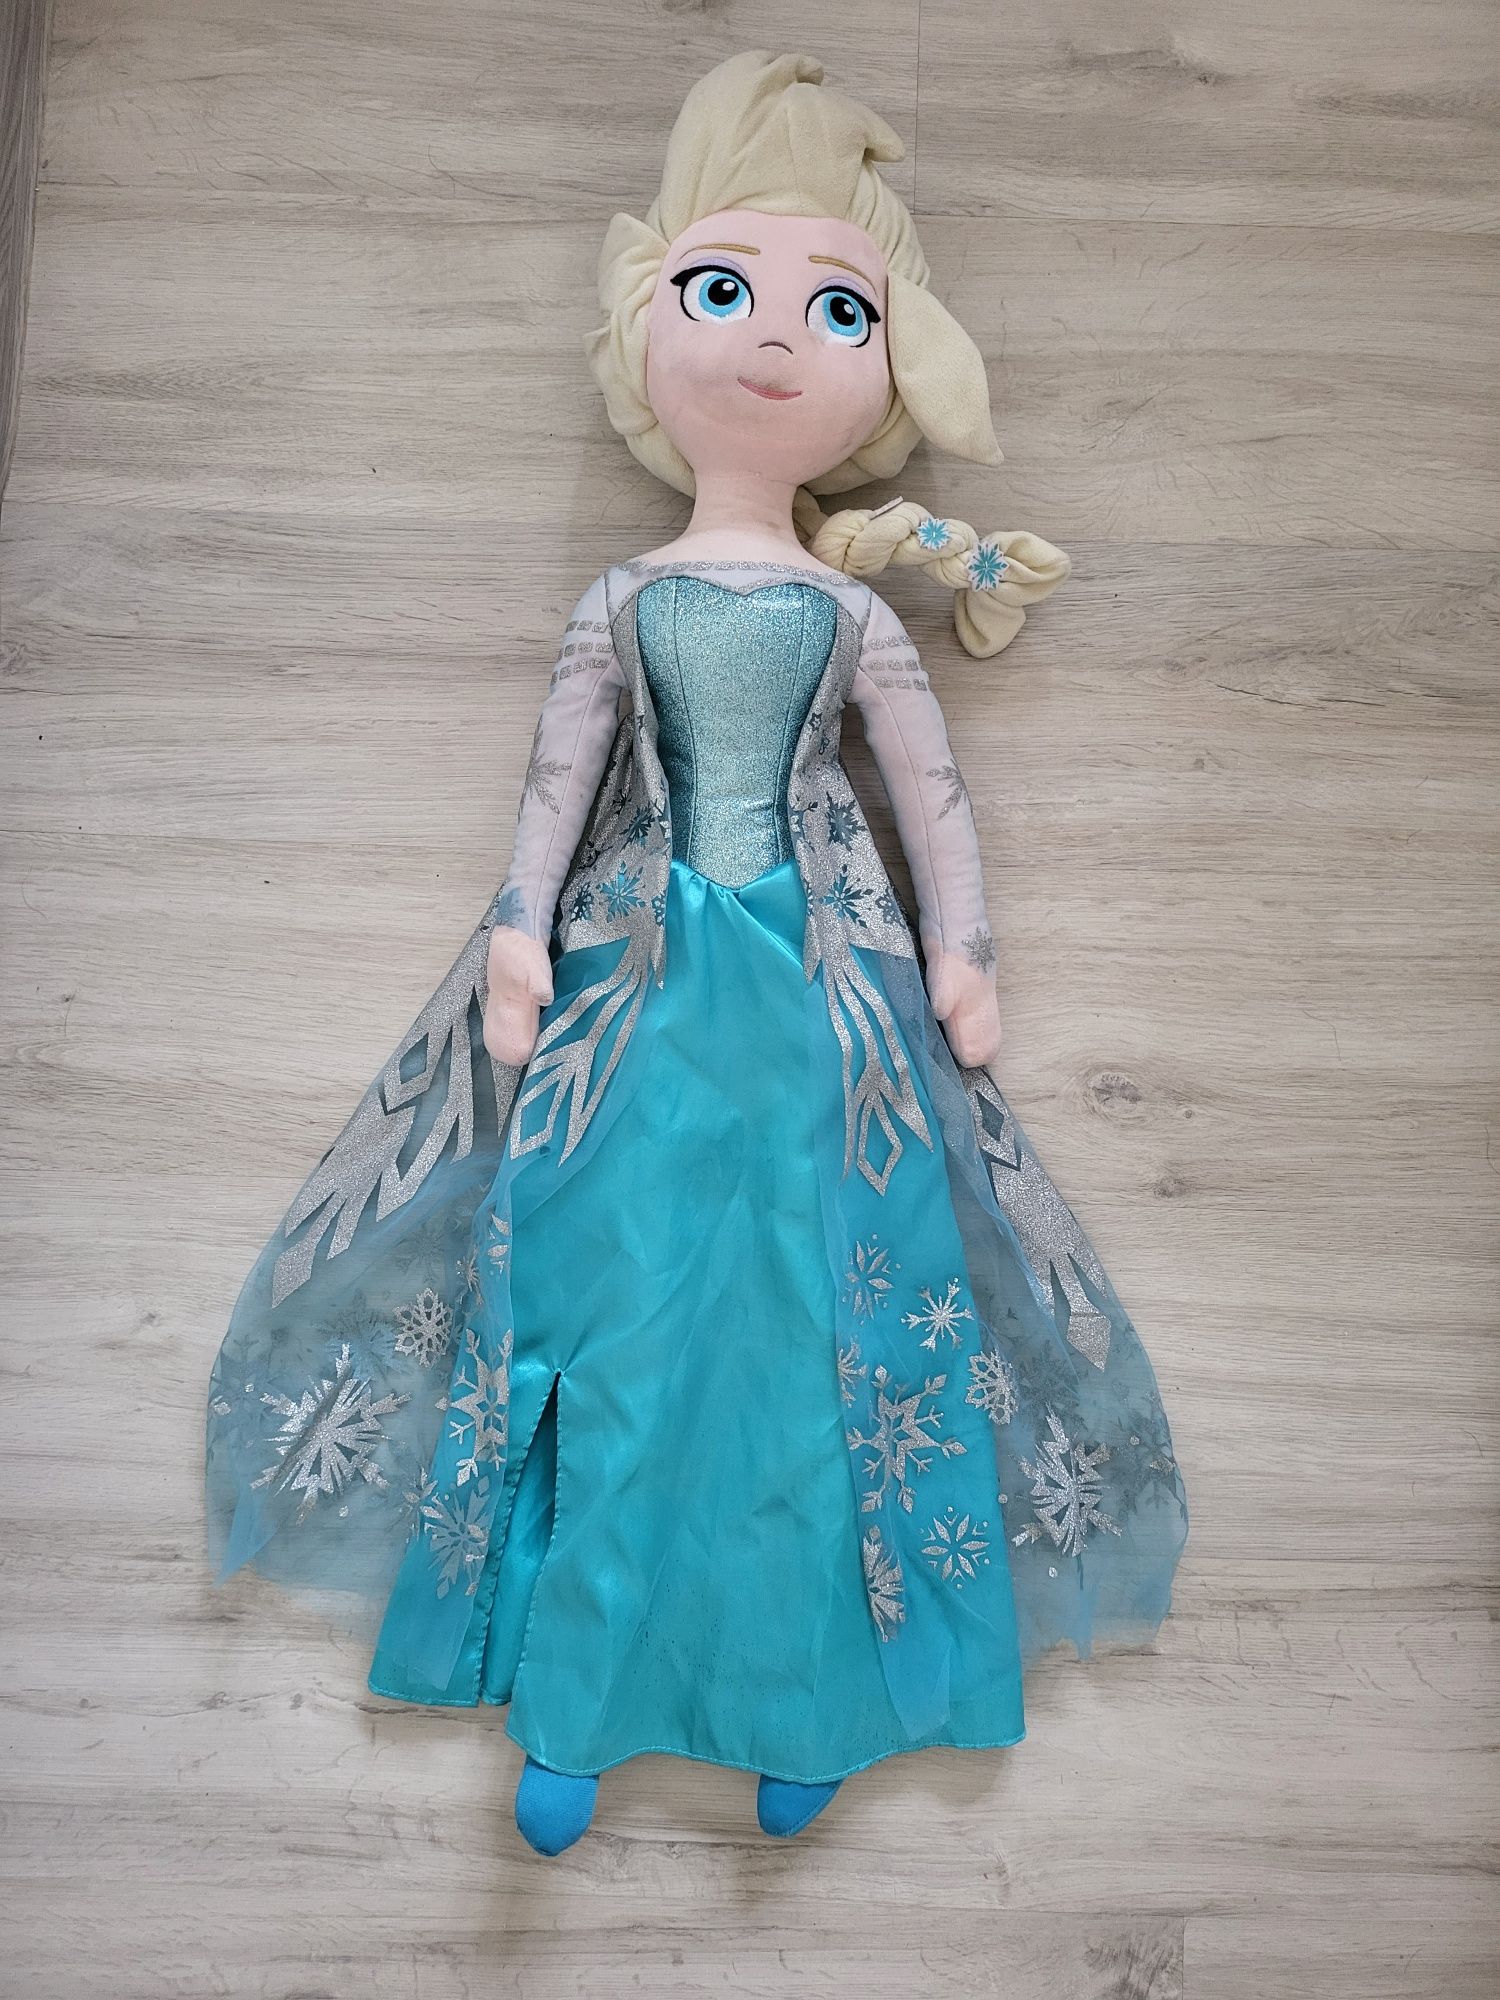 Papusa Elsa 1 m inaltime, cantă, fara defecte.